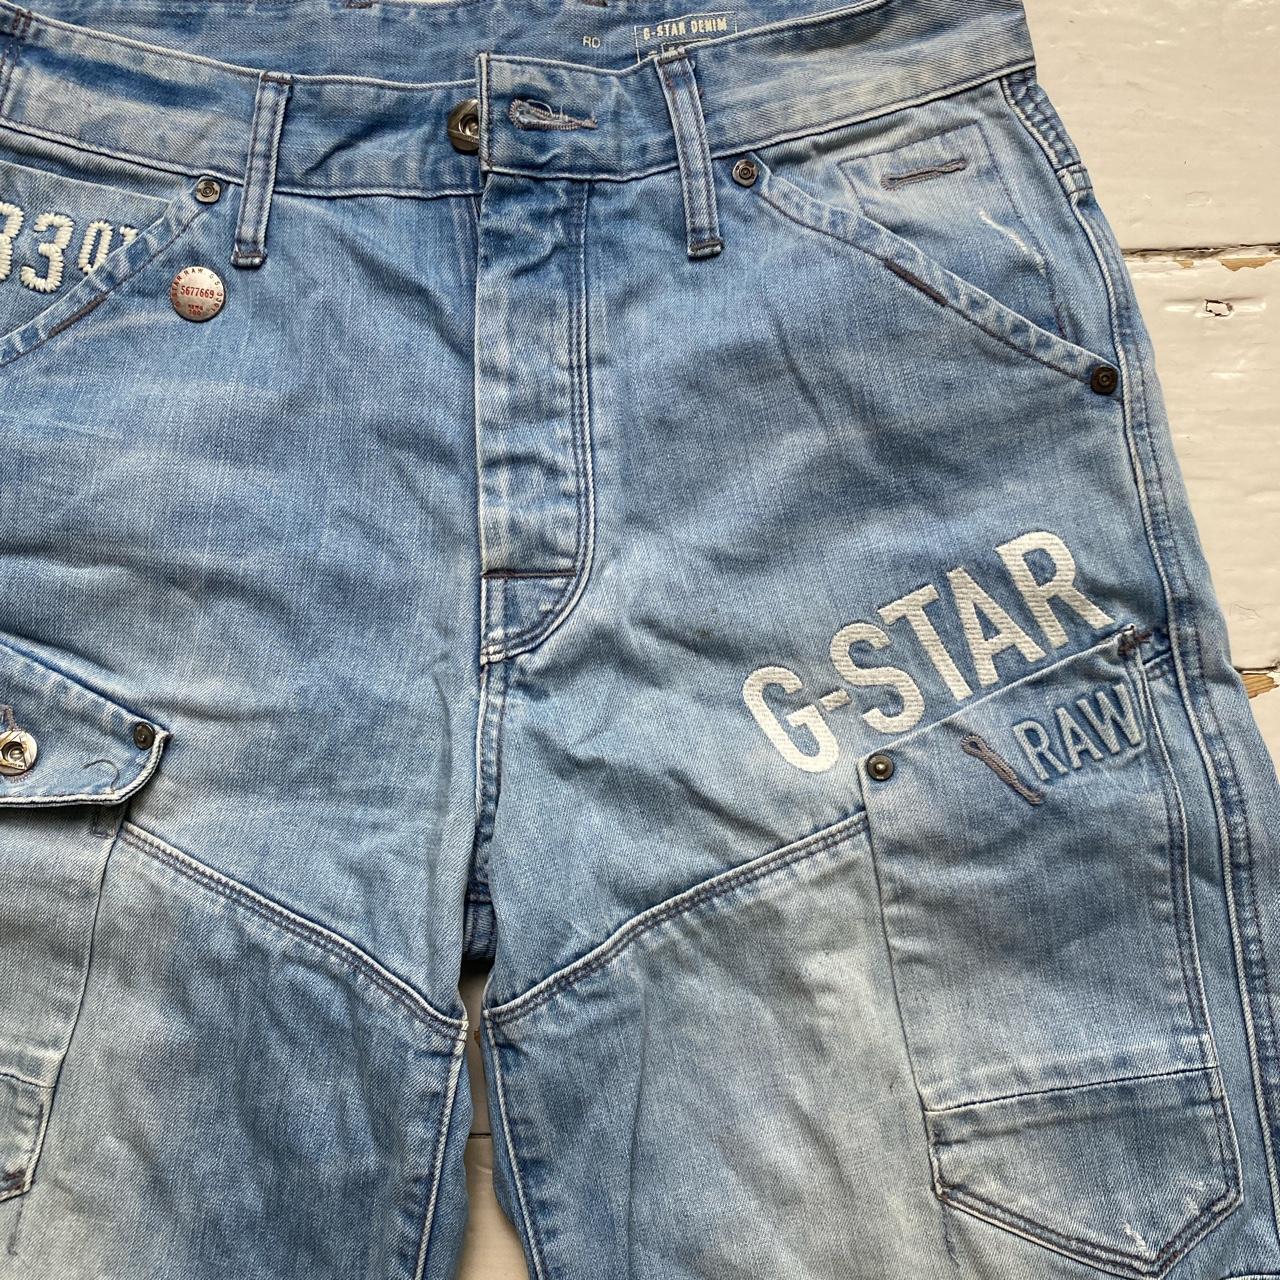 G Star Raw Light Blue Cargo Jean Shorts Jorts